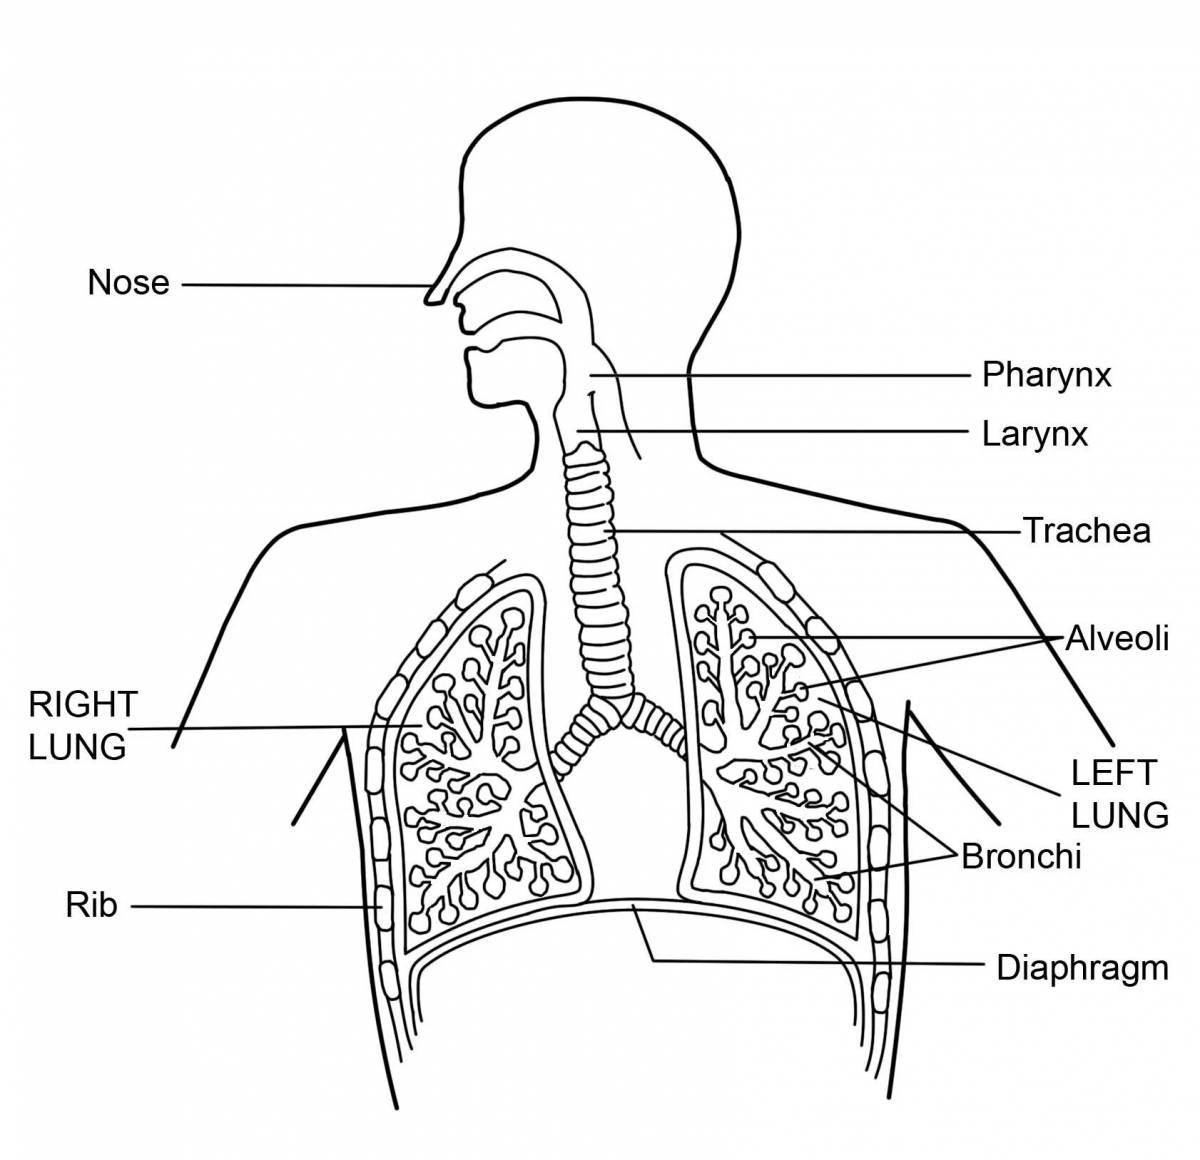 Respiratory system #2